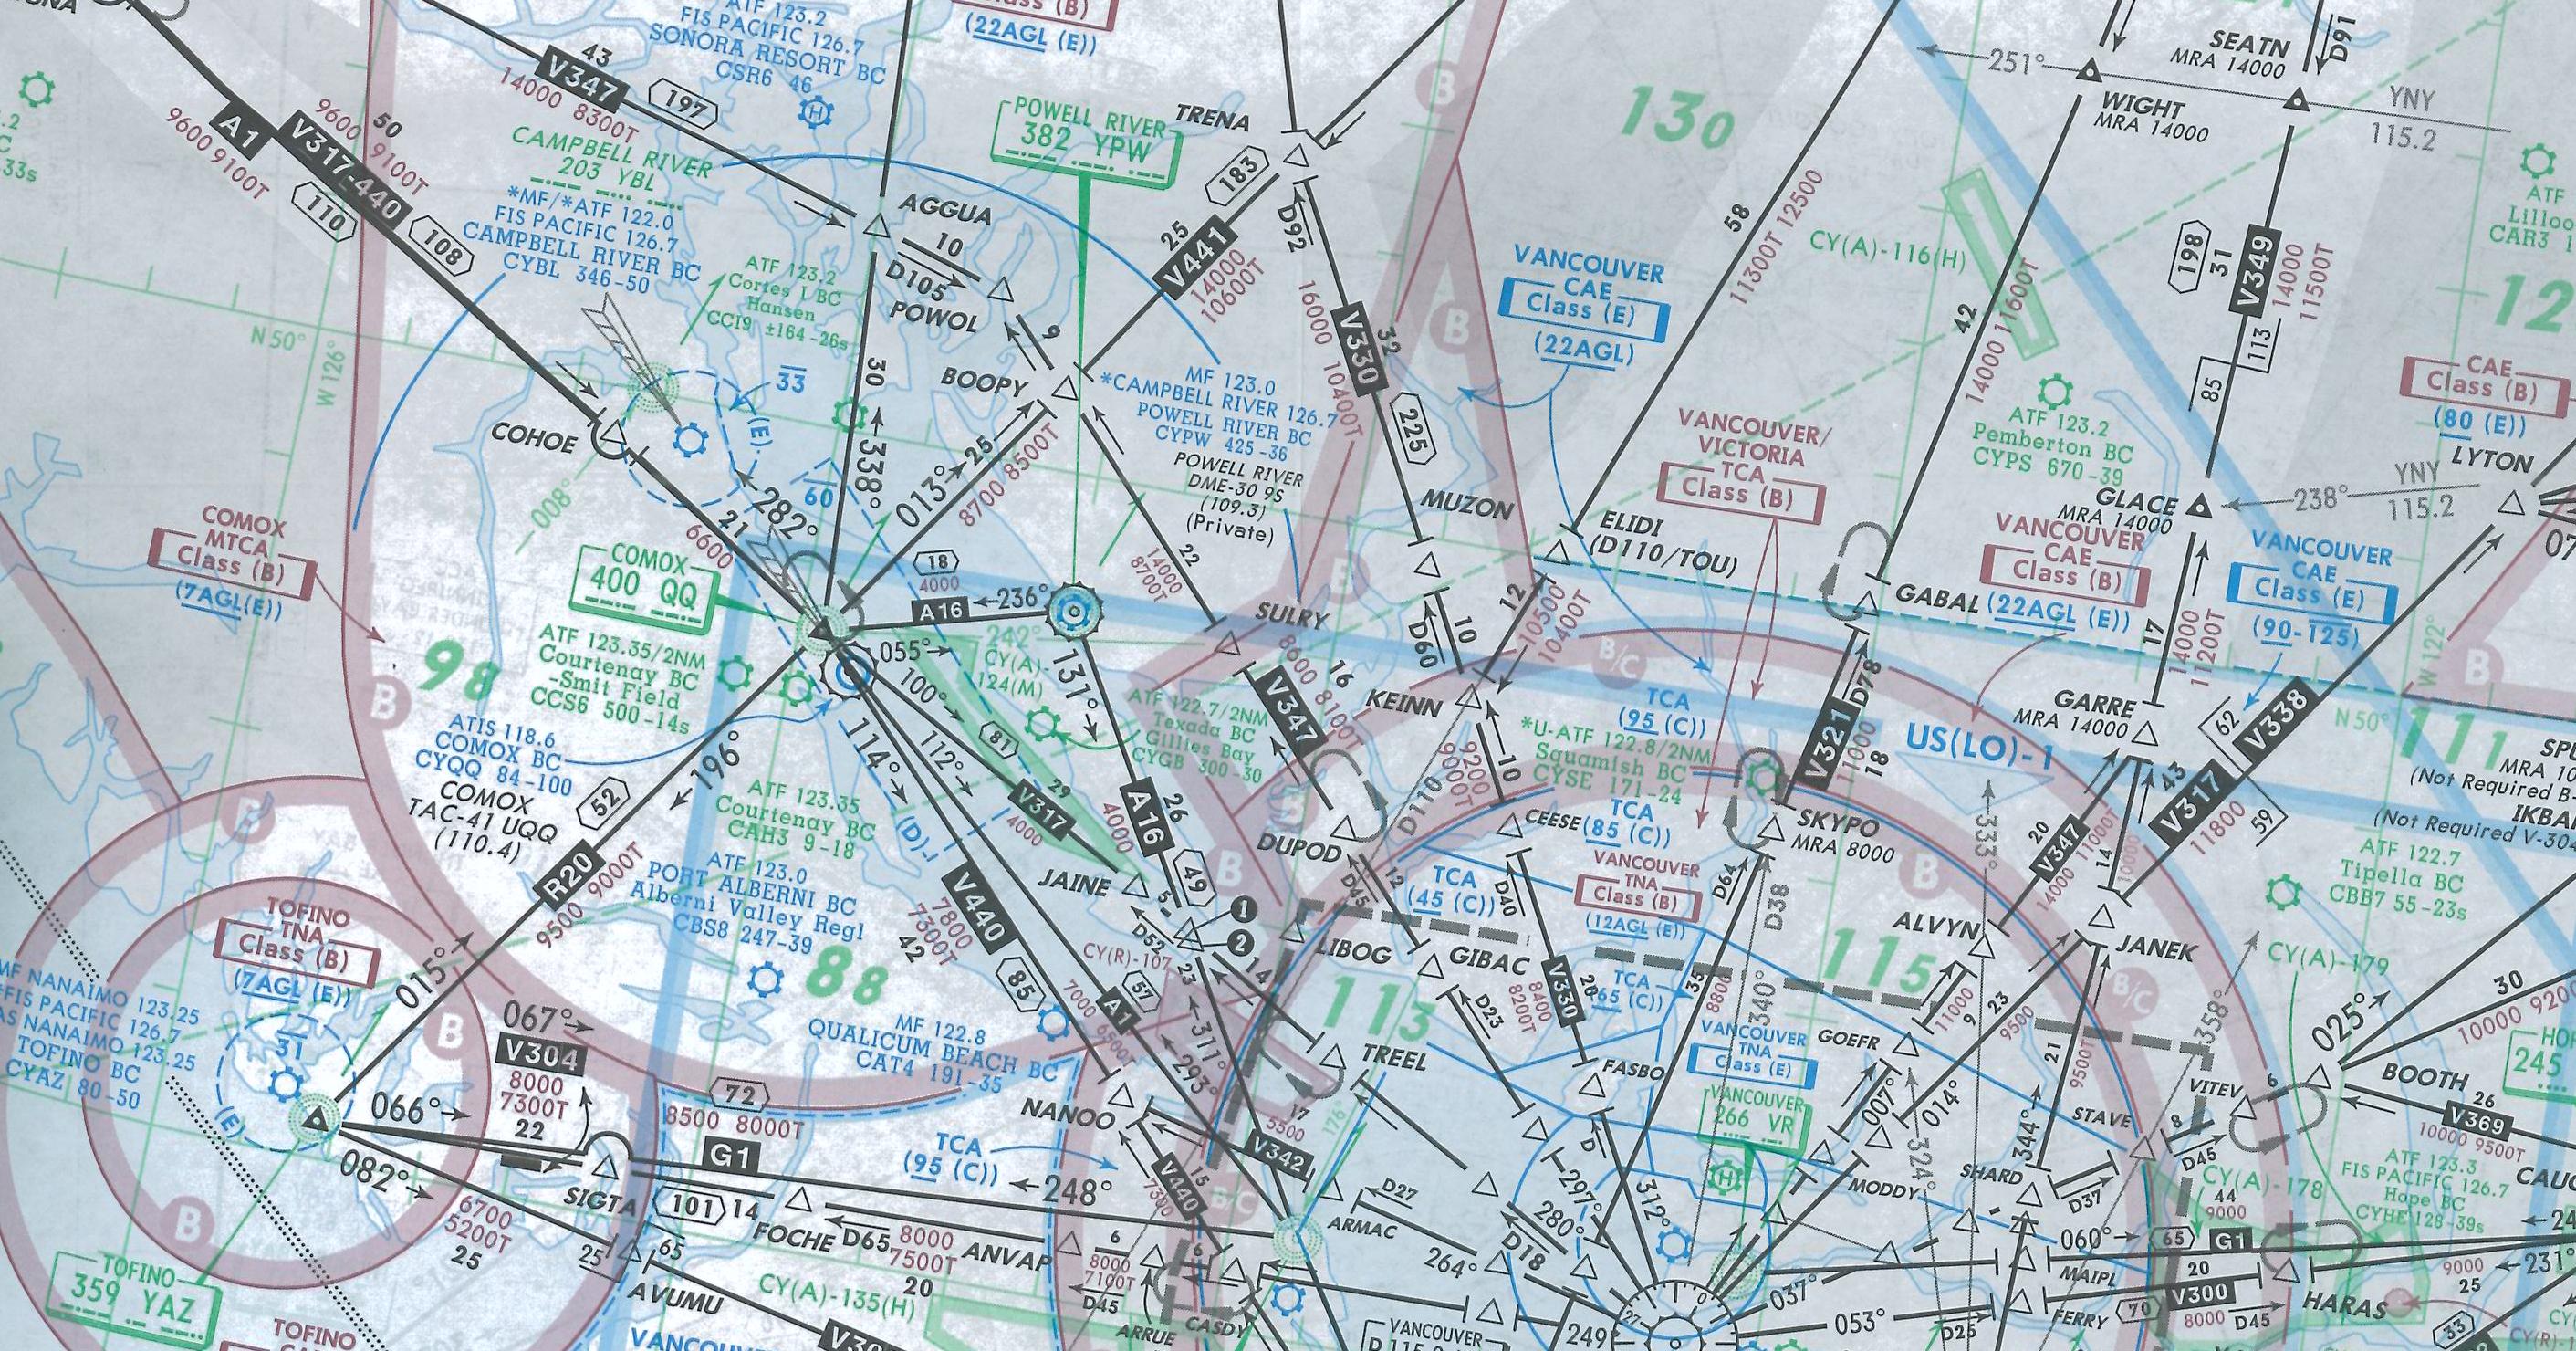 Map Room, IFR Georgia Strait, Langley Flying School